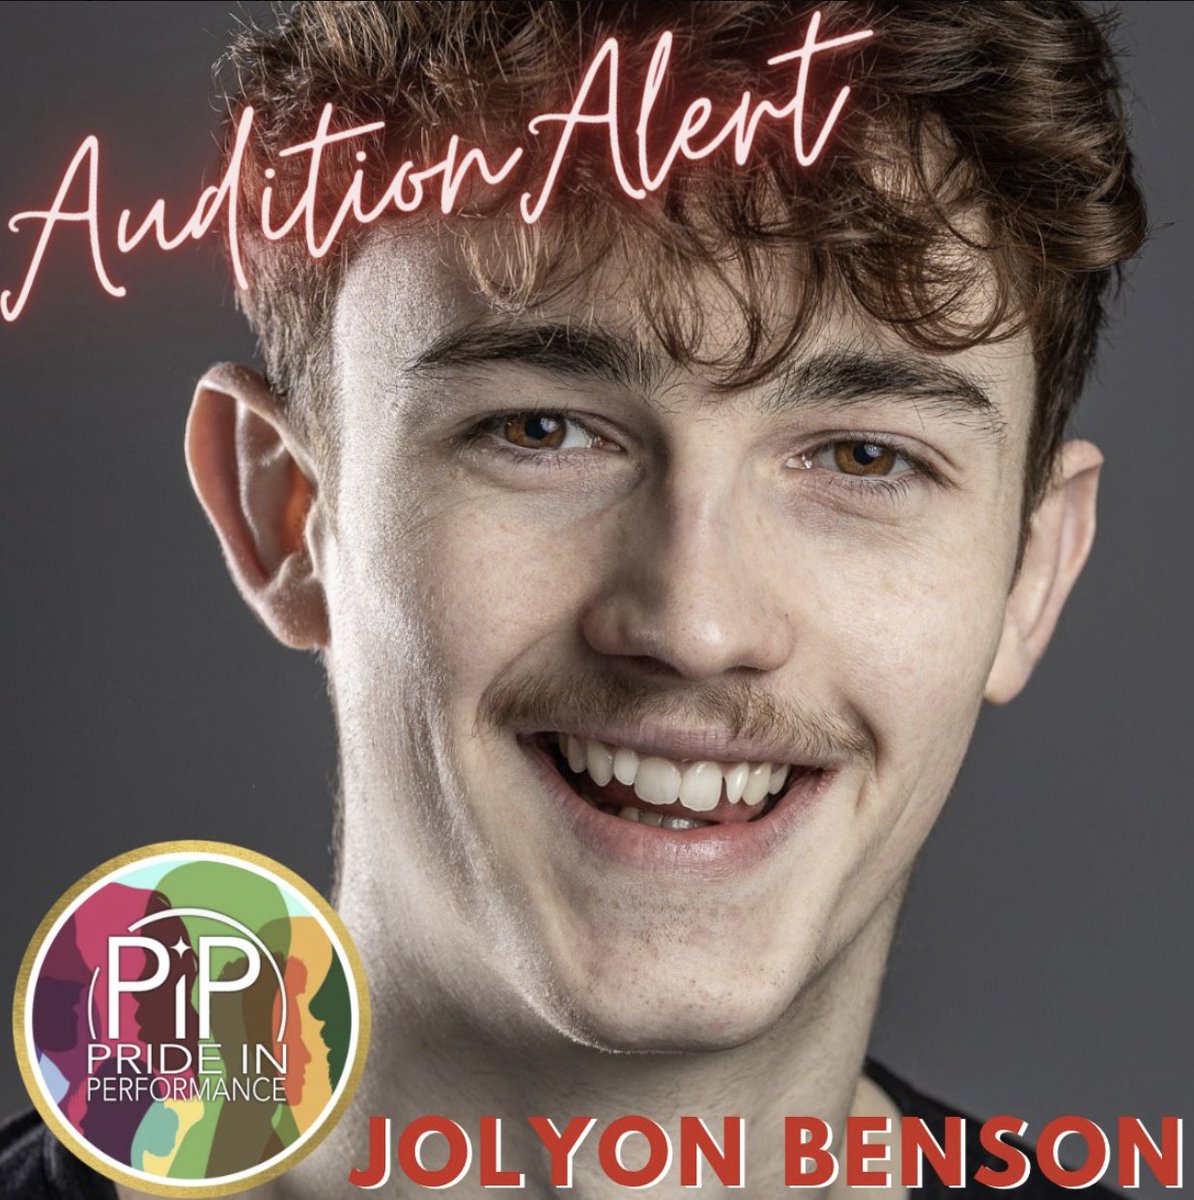 🚨 Audition Alert For JOLYON BENSON 🚨
enjoying a lovely #SelfTape #Casting for an ICONIC #Telecision #Series  
spotlight.com/7051-6724-1551
#PositivelyPiP
#AuditionAlert
#ActorsLife